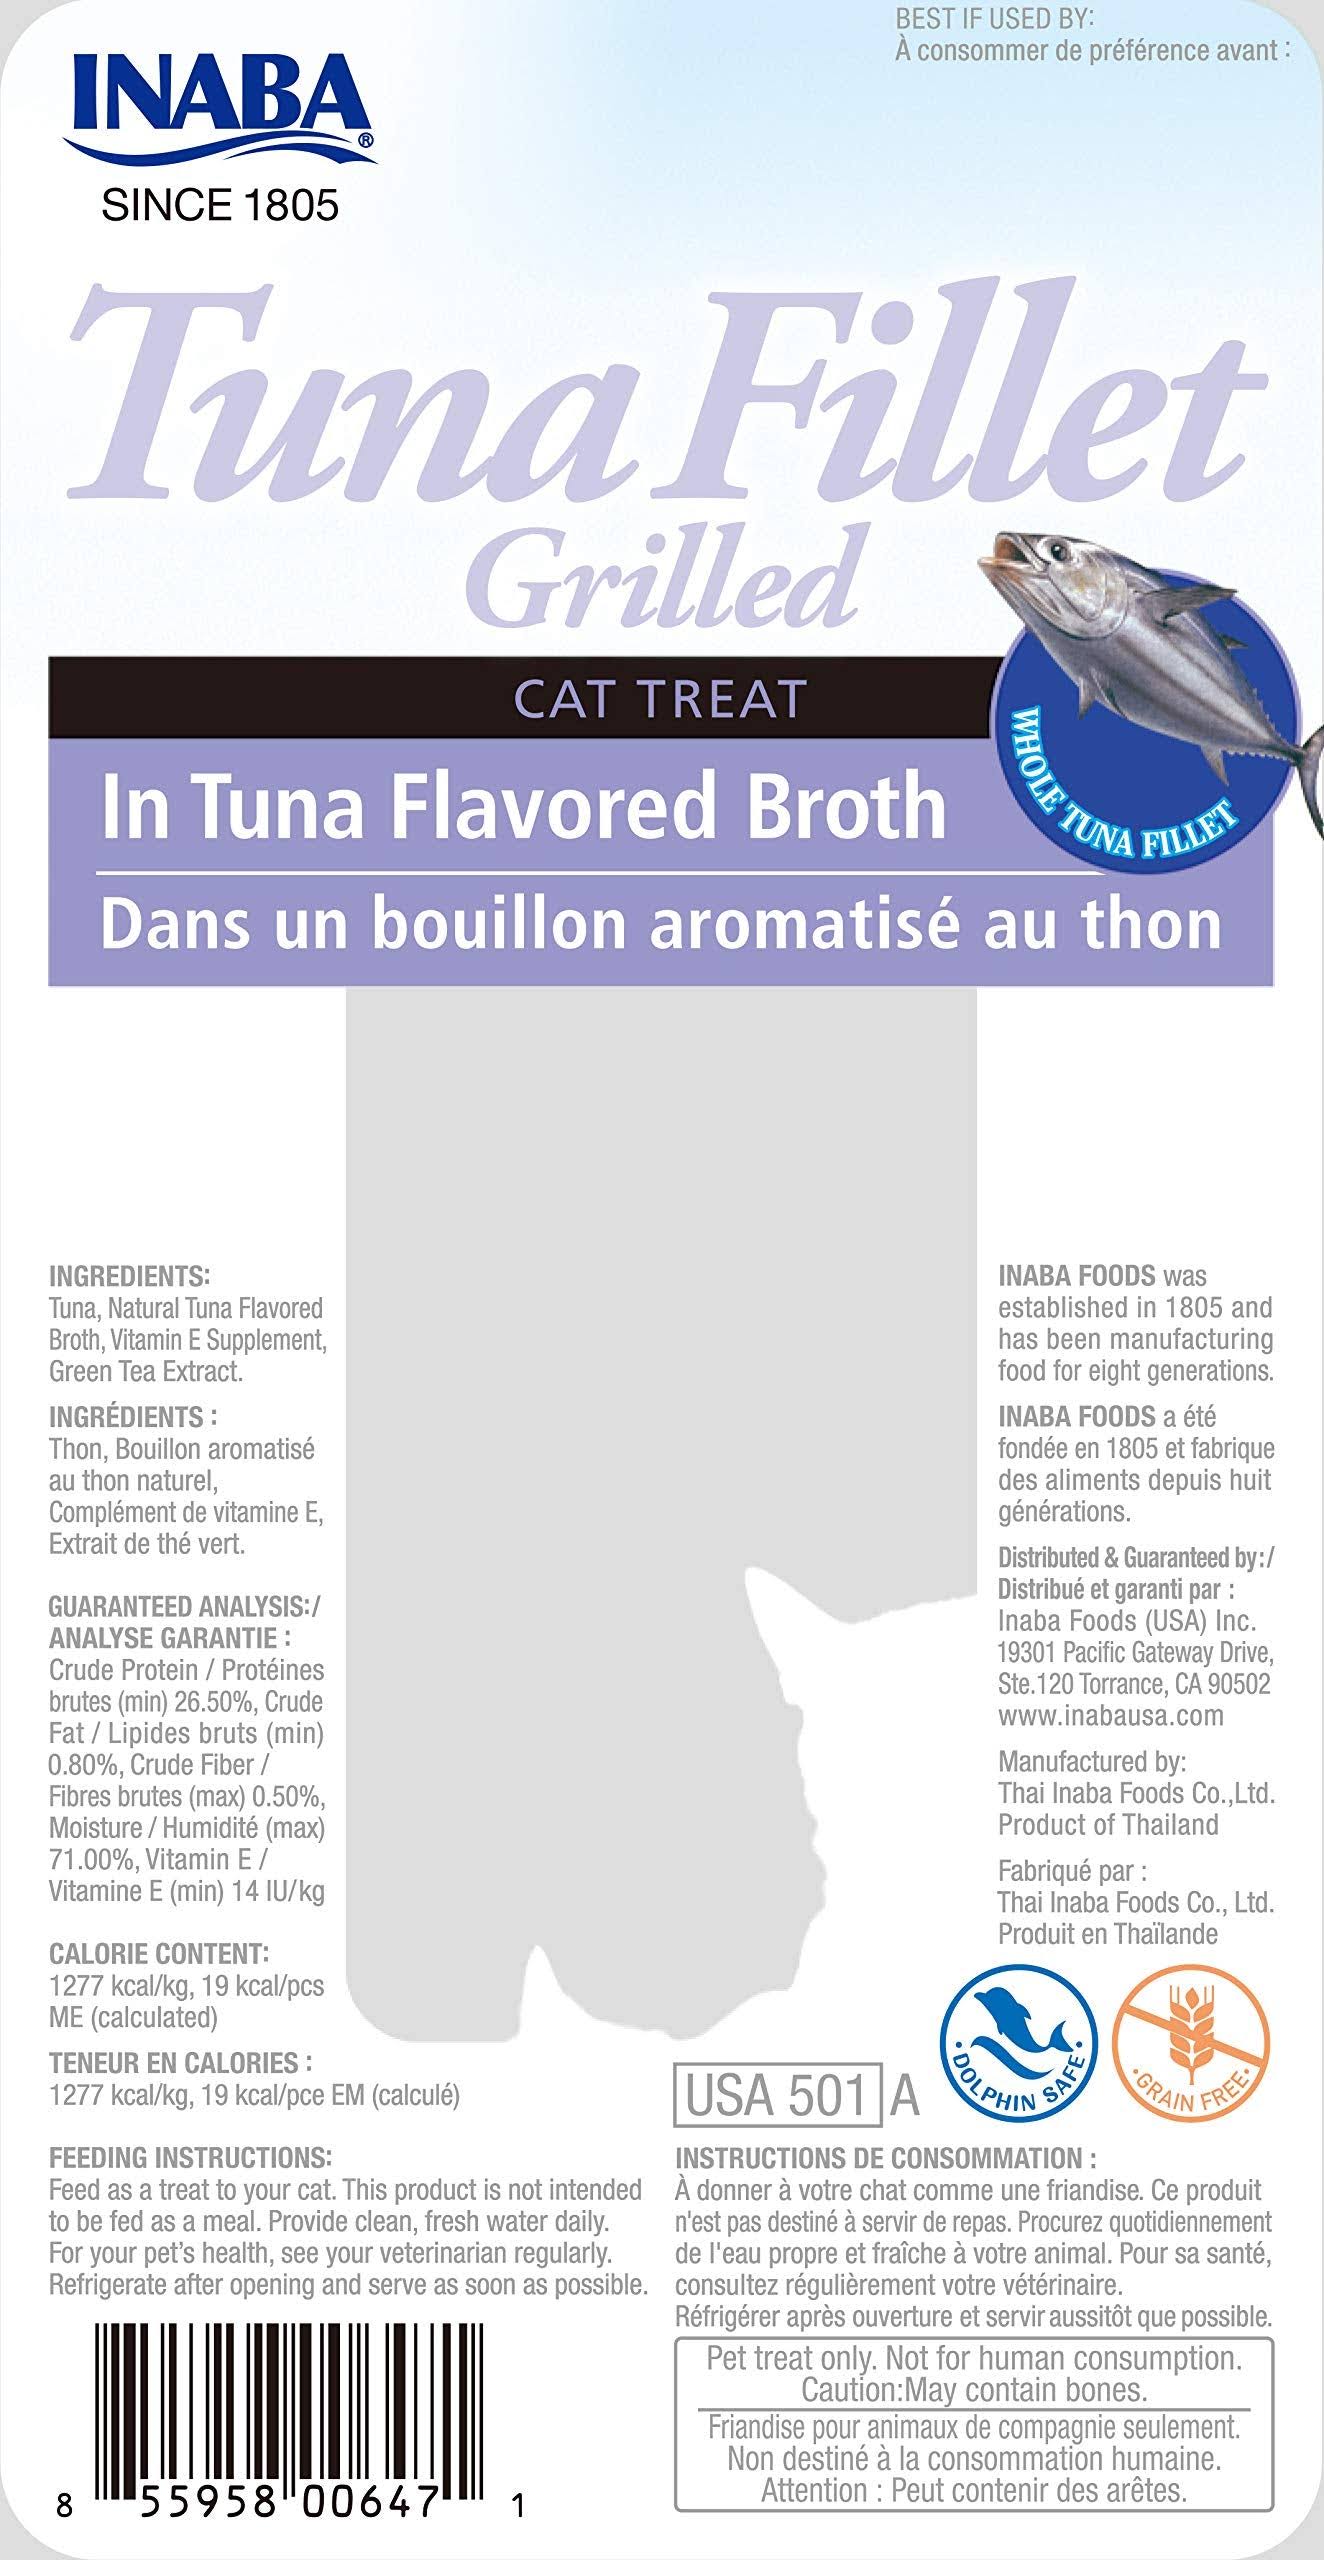 Inaba Cat Treat Grilled Tuna Fillet in Tuna Broth 15g